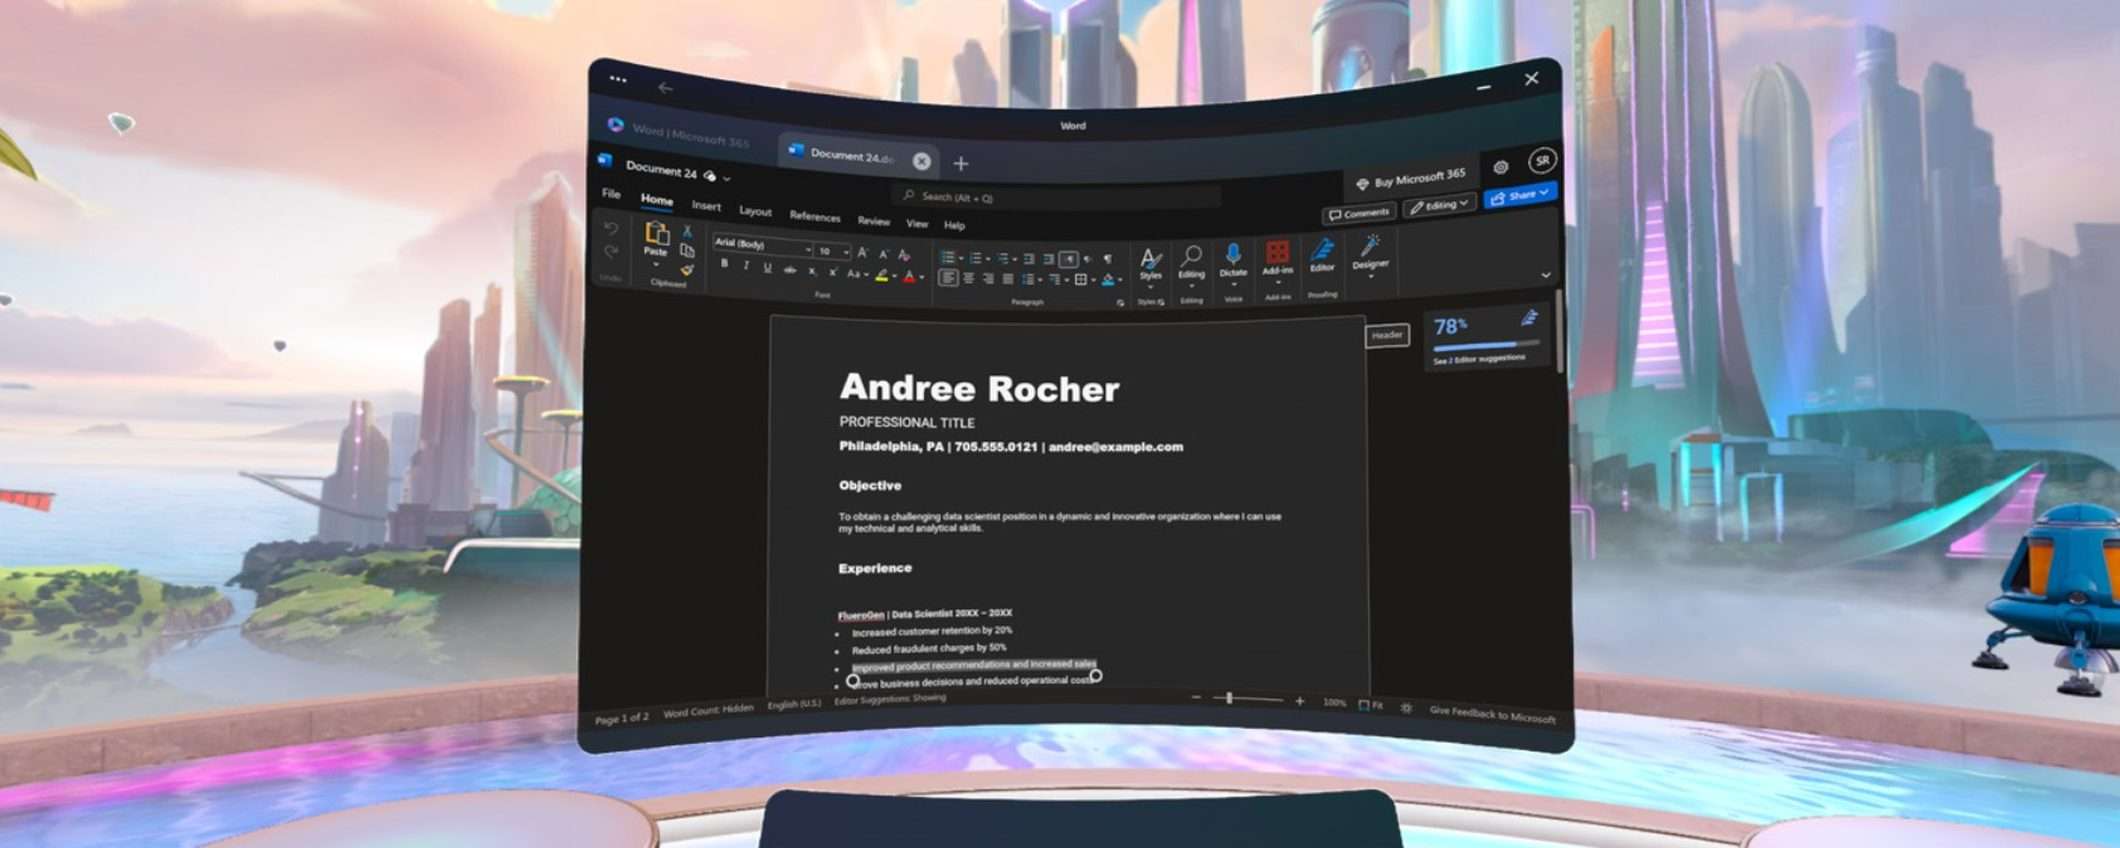 Office è gratis su Meta Quest: Word ed Excel in VR